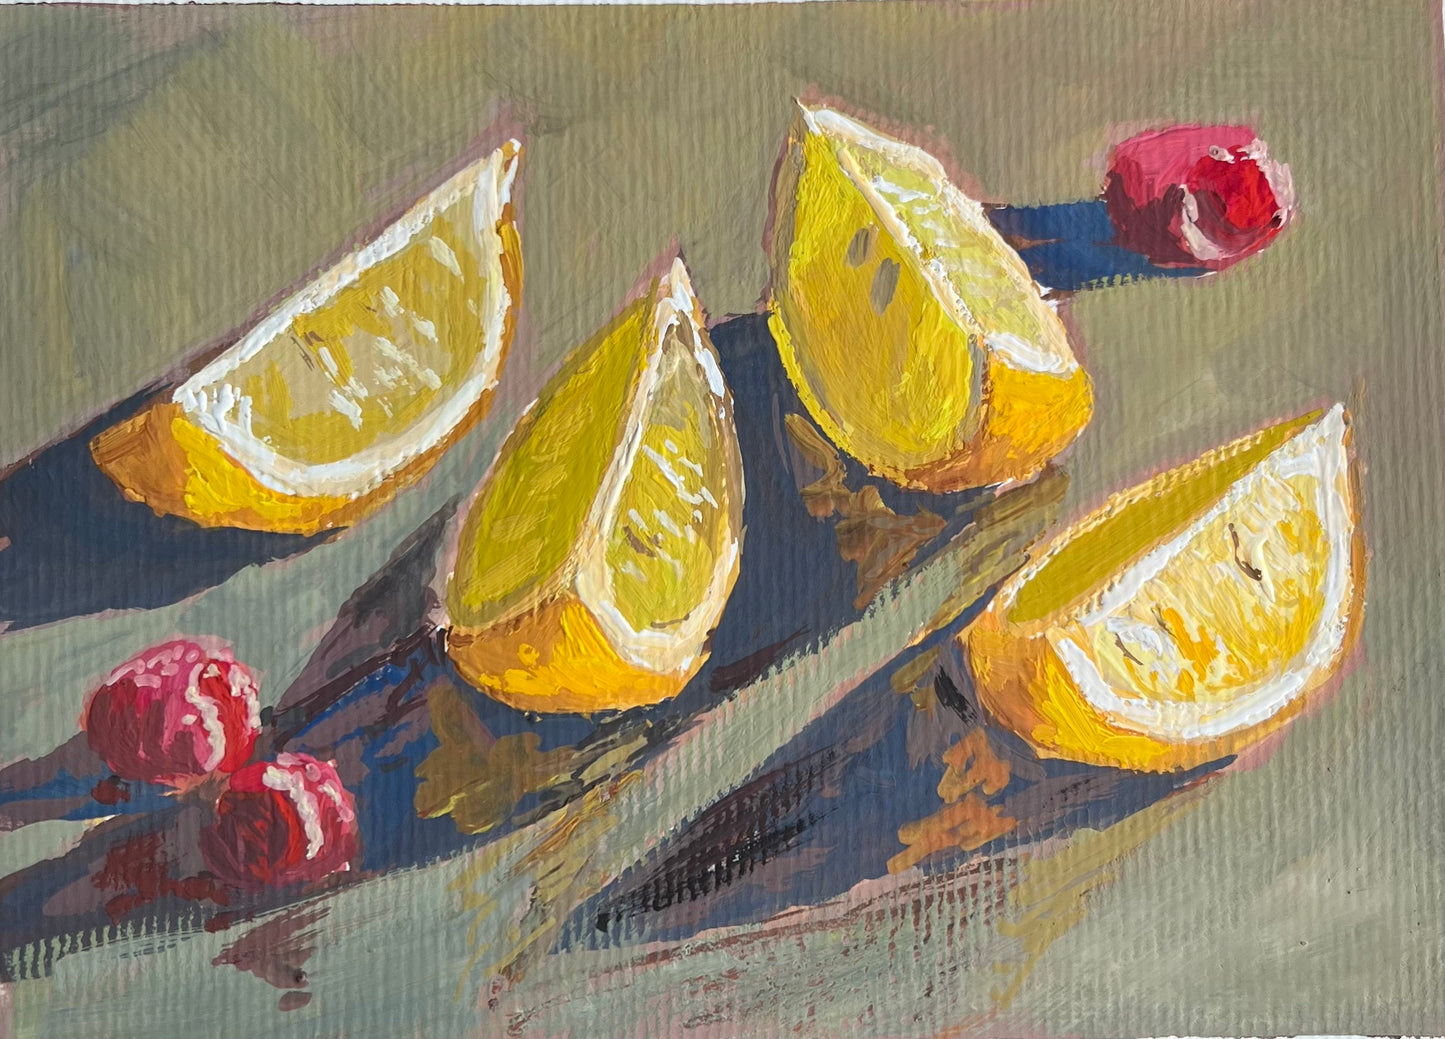 Lemon Slices in the sun - Small Still Life Gouache Painting